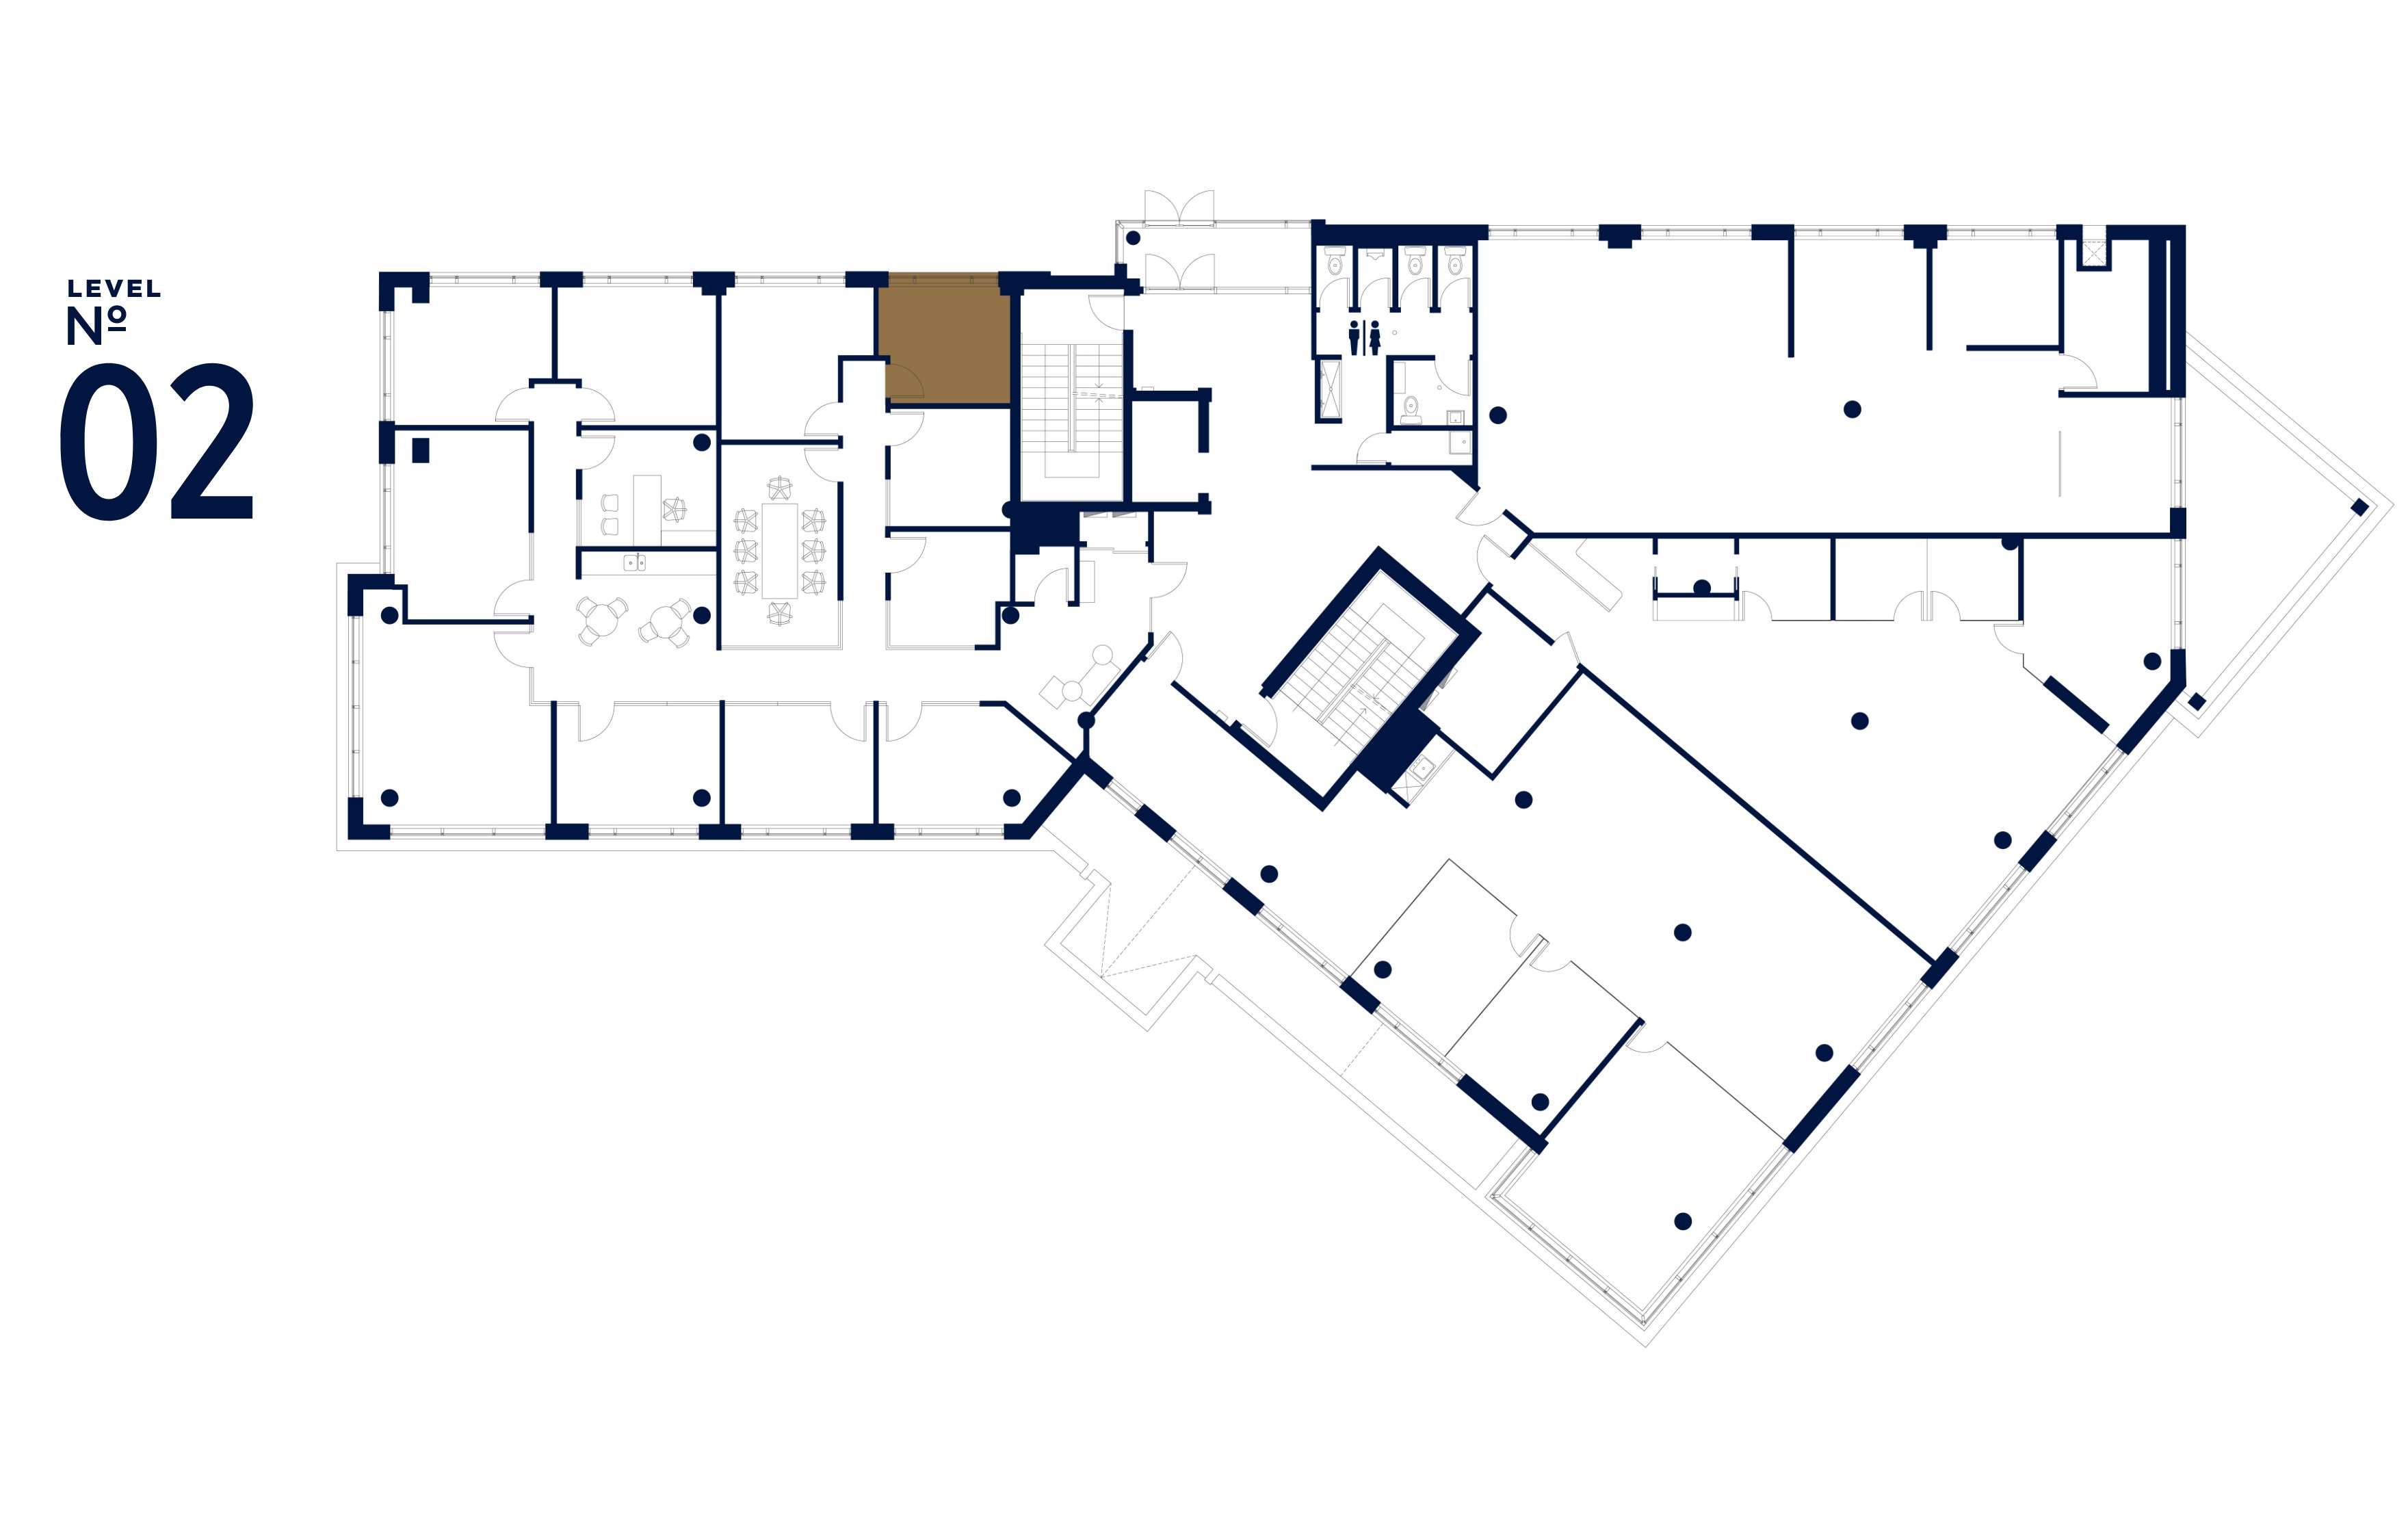 Floor plan for office 216